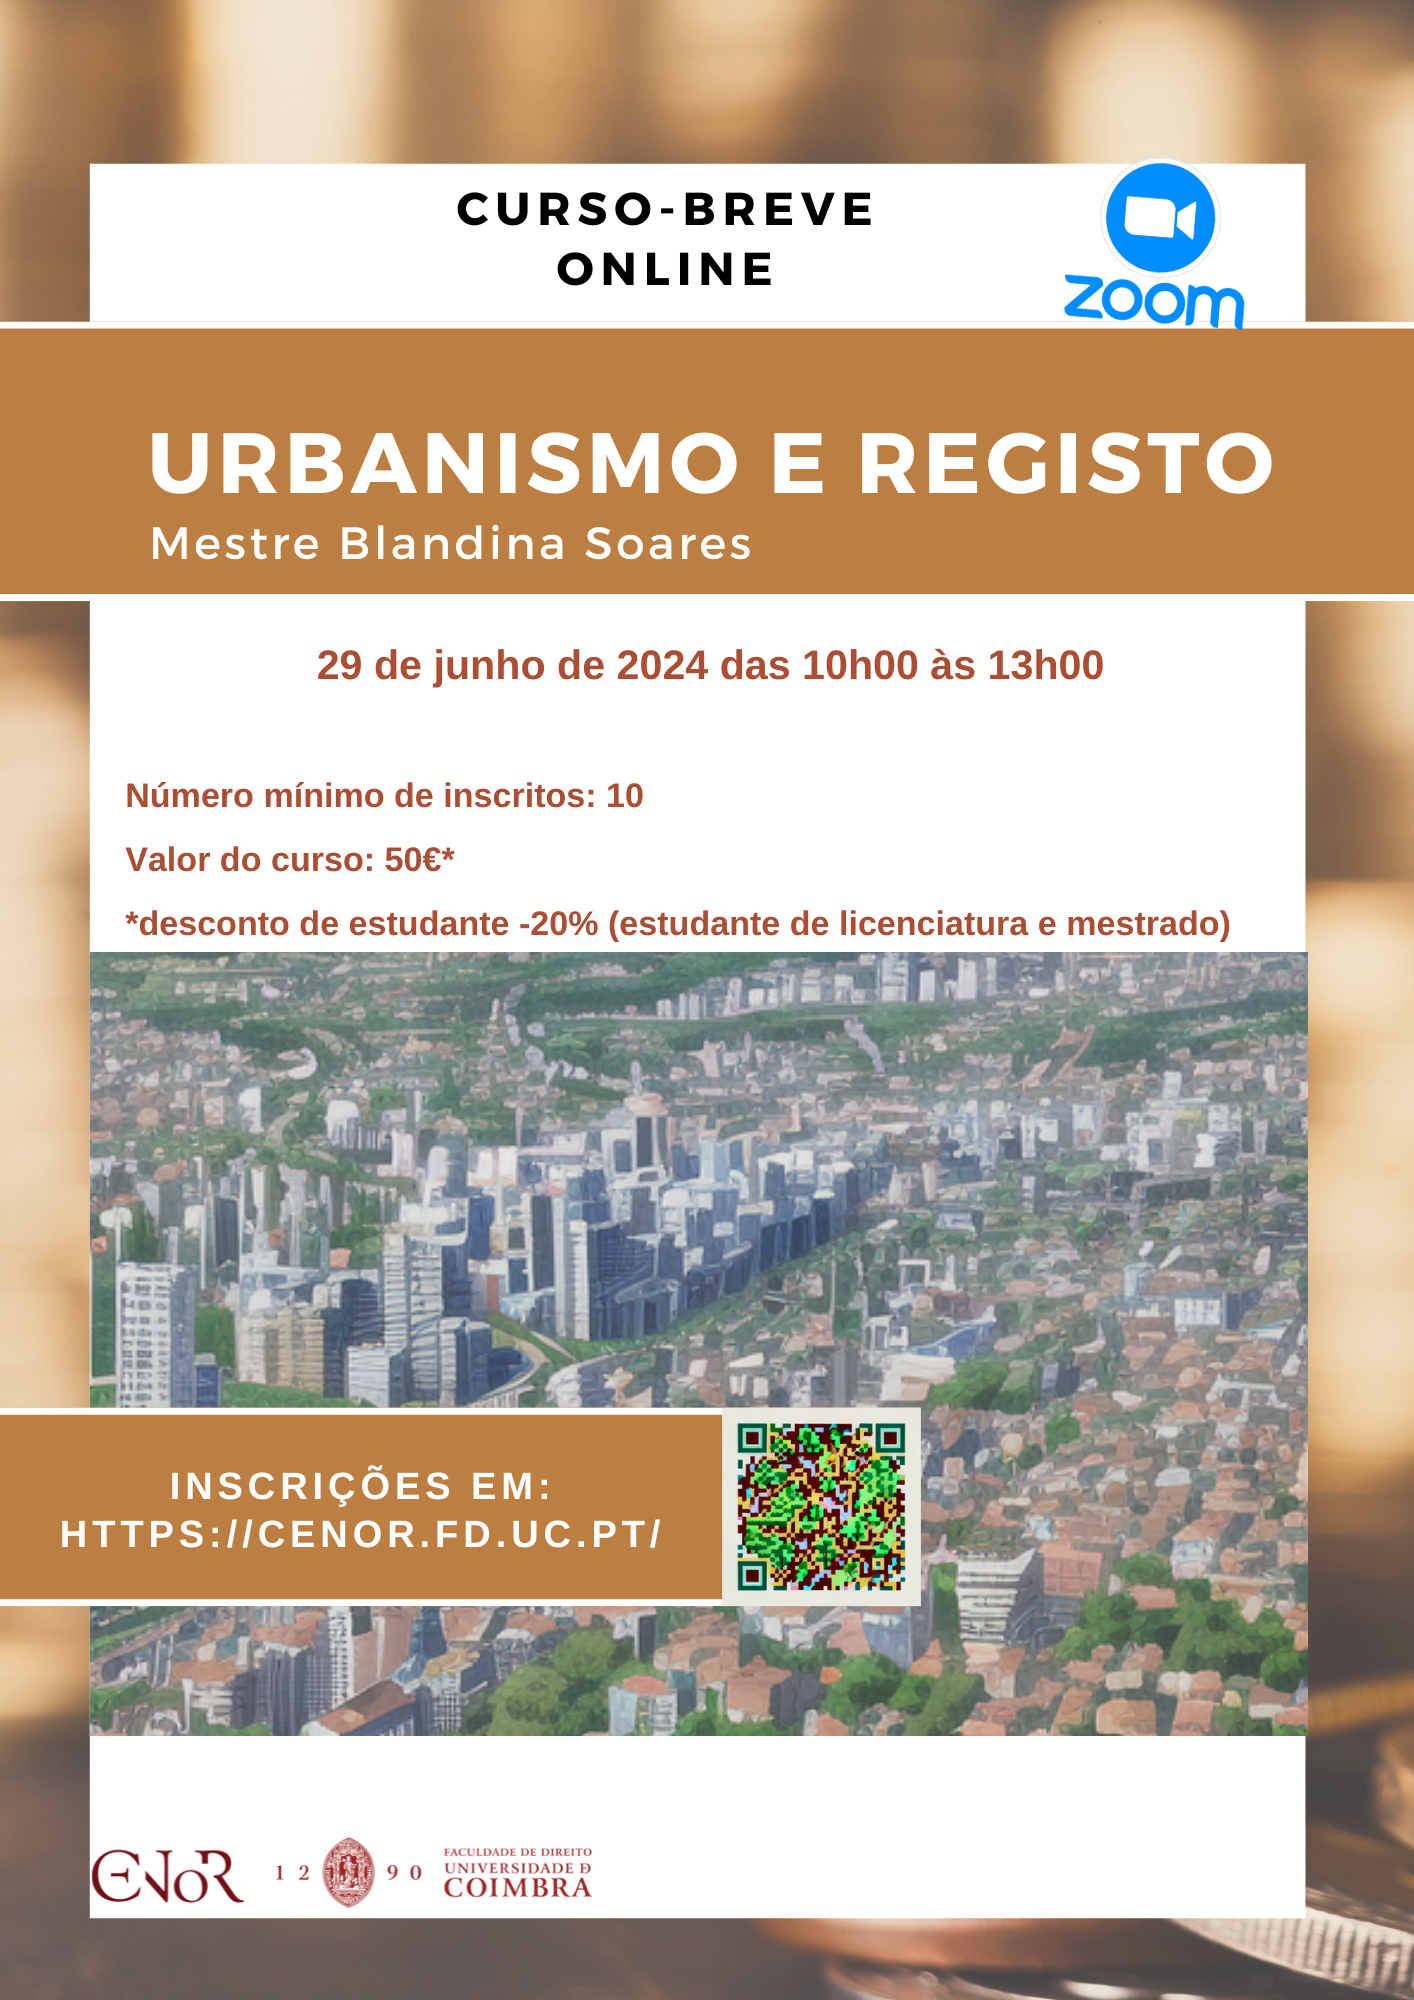 Urbanismo e Registo